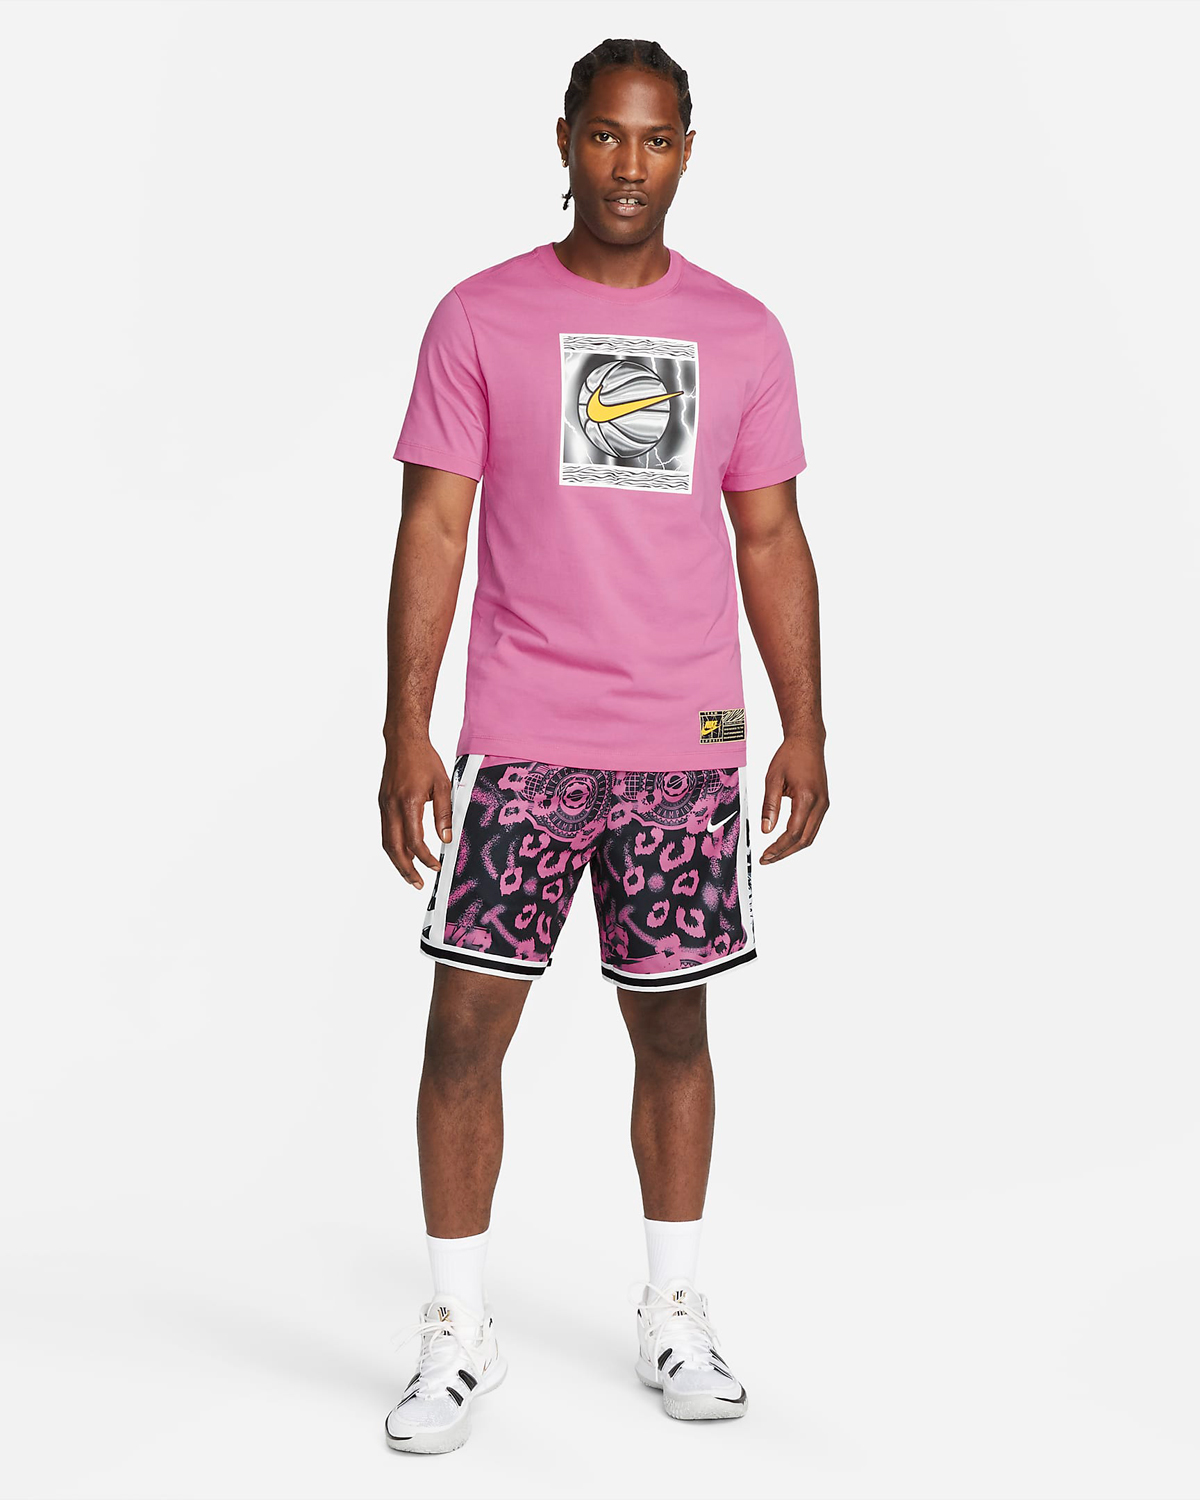 Nike-Basketball-Pink-Shirt-Shorts-Outfit